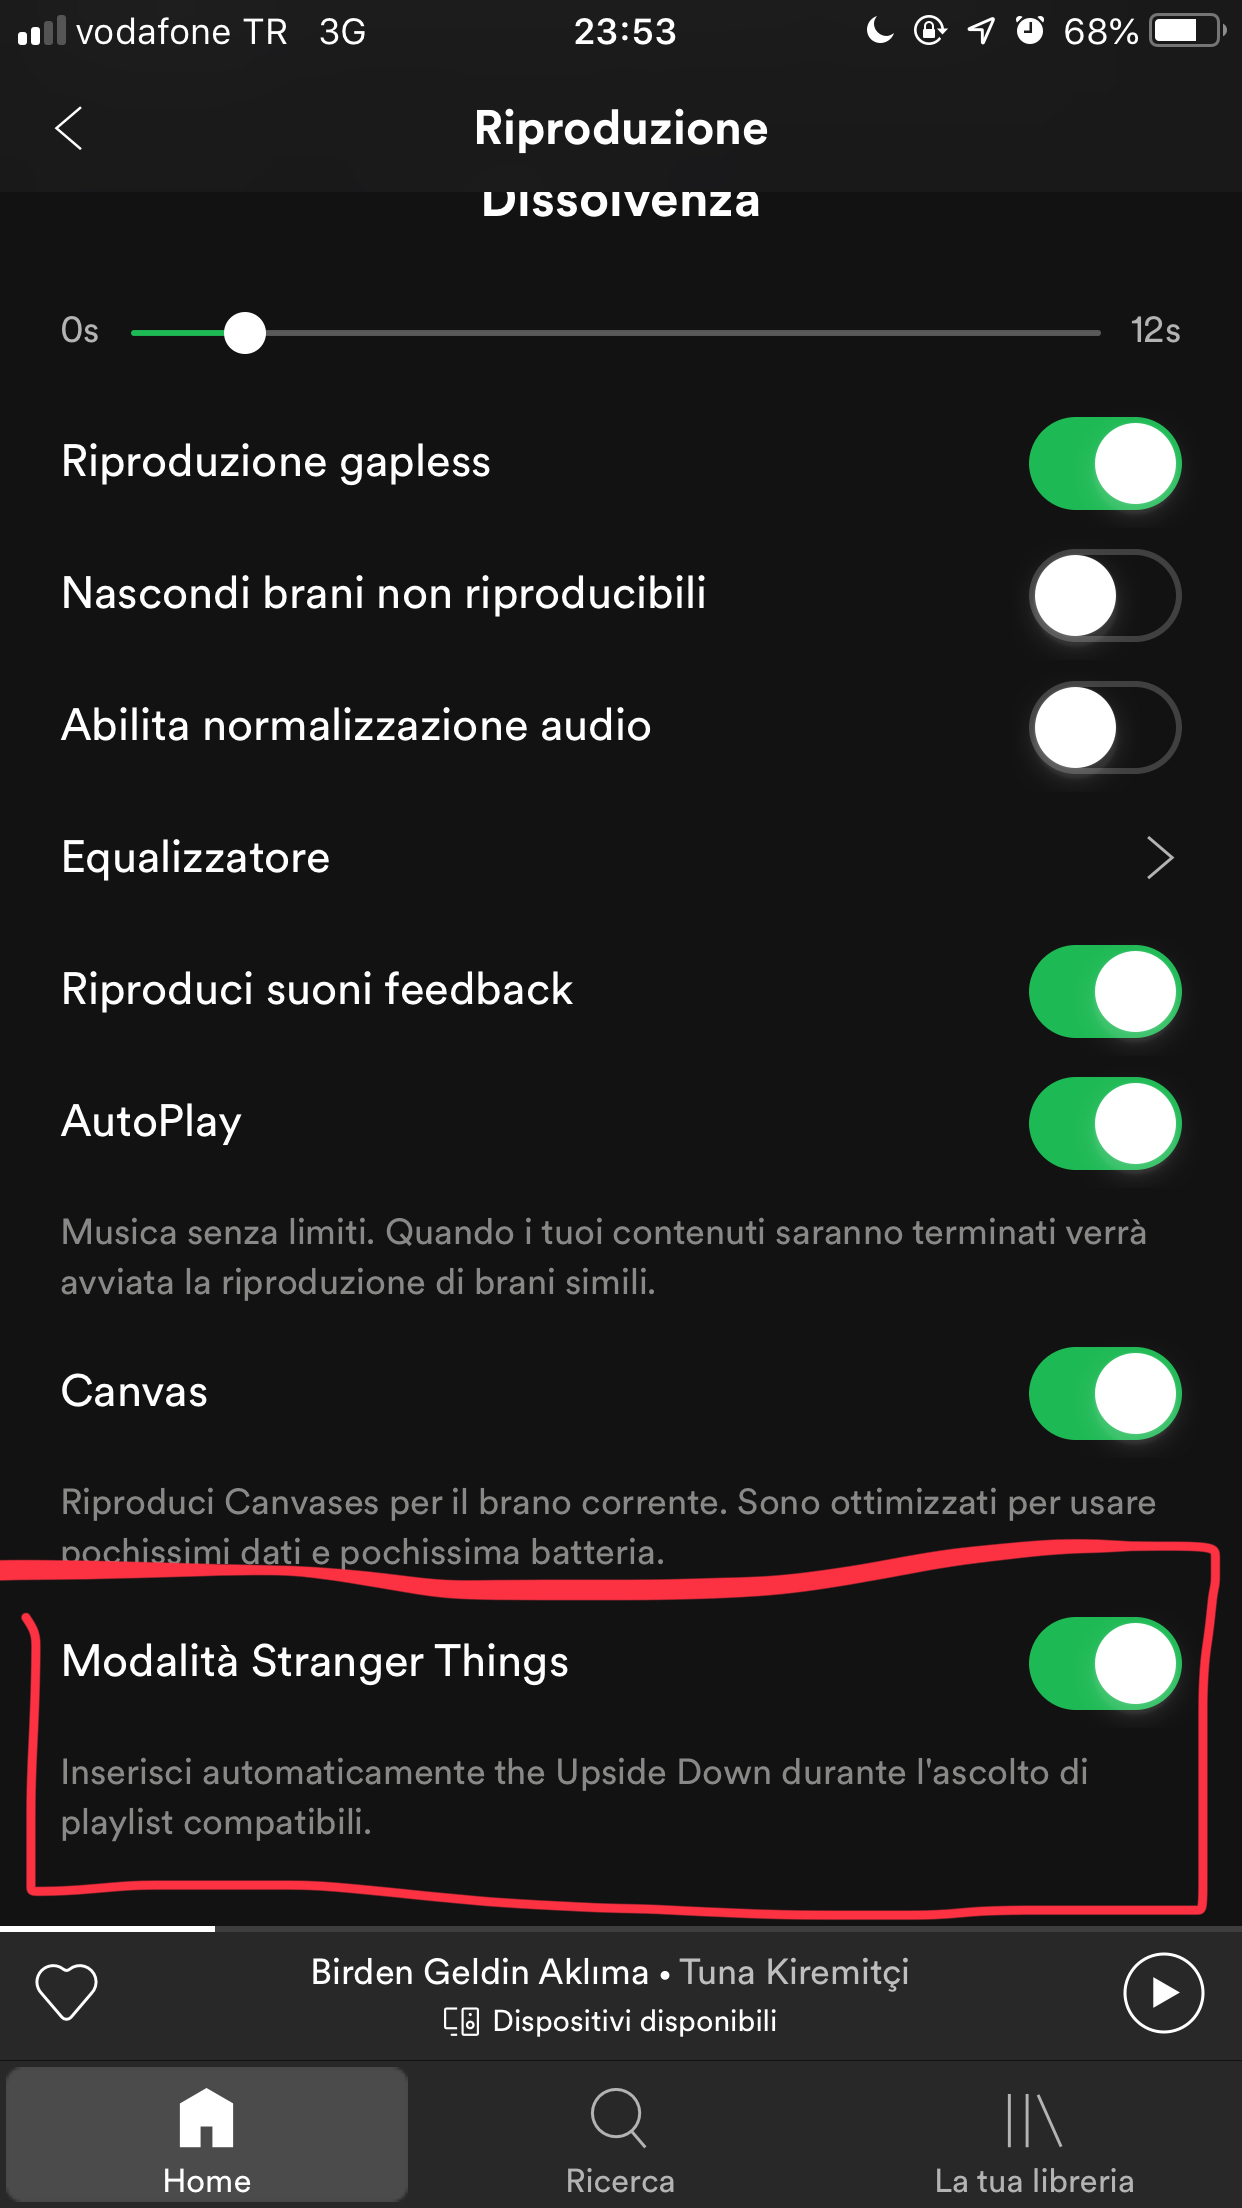 Spotify stranger things mode